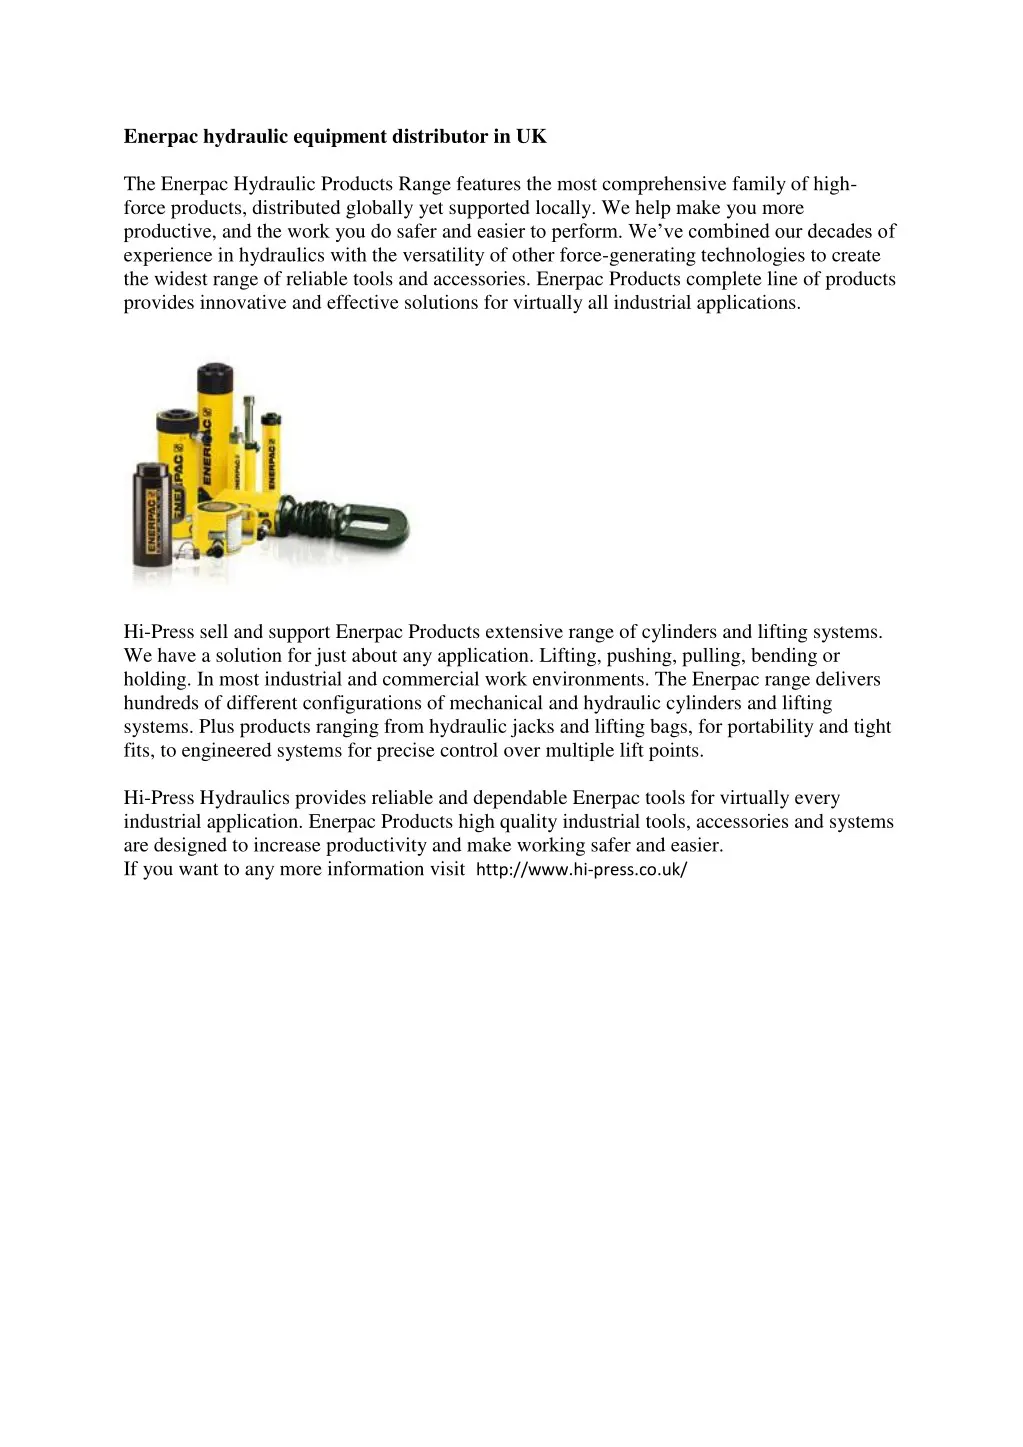 enerpac hydraulic equipment distributor